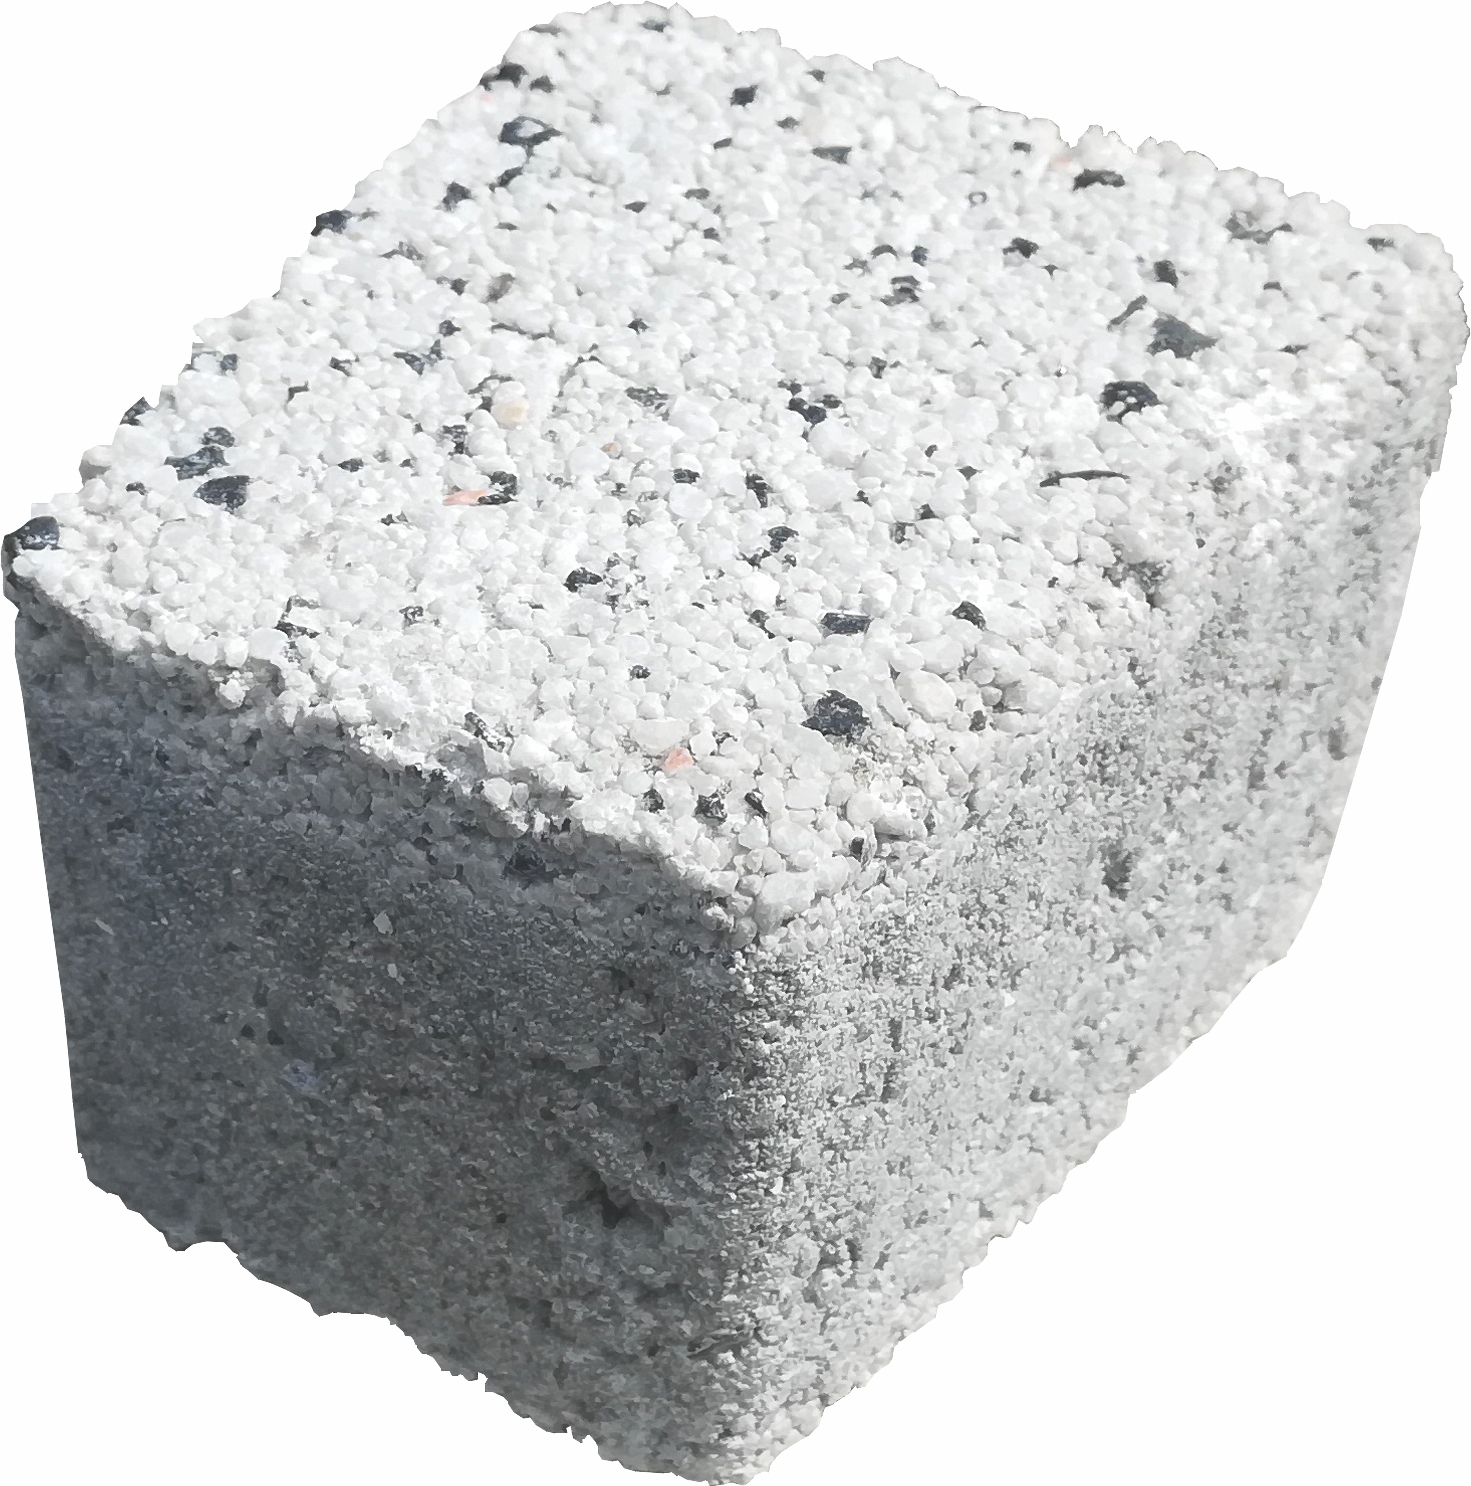 Pavele vibropresate din beton grosime 6 cm SYMM 101 Arco Granito, culoare alba